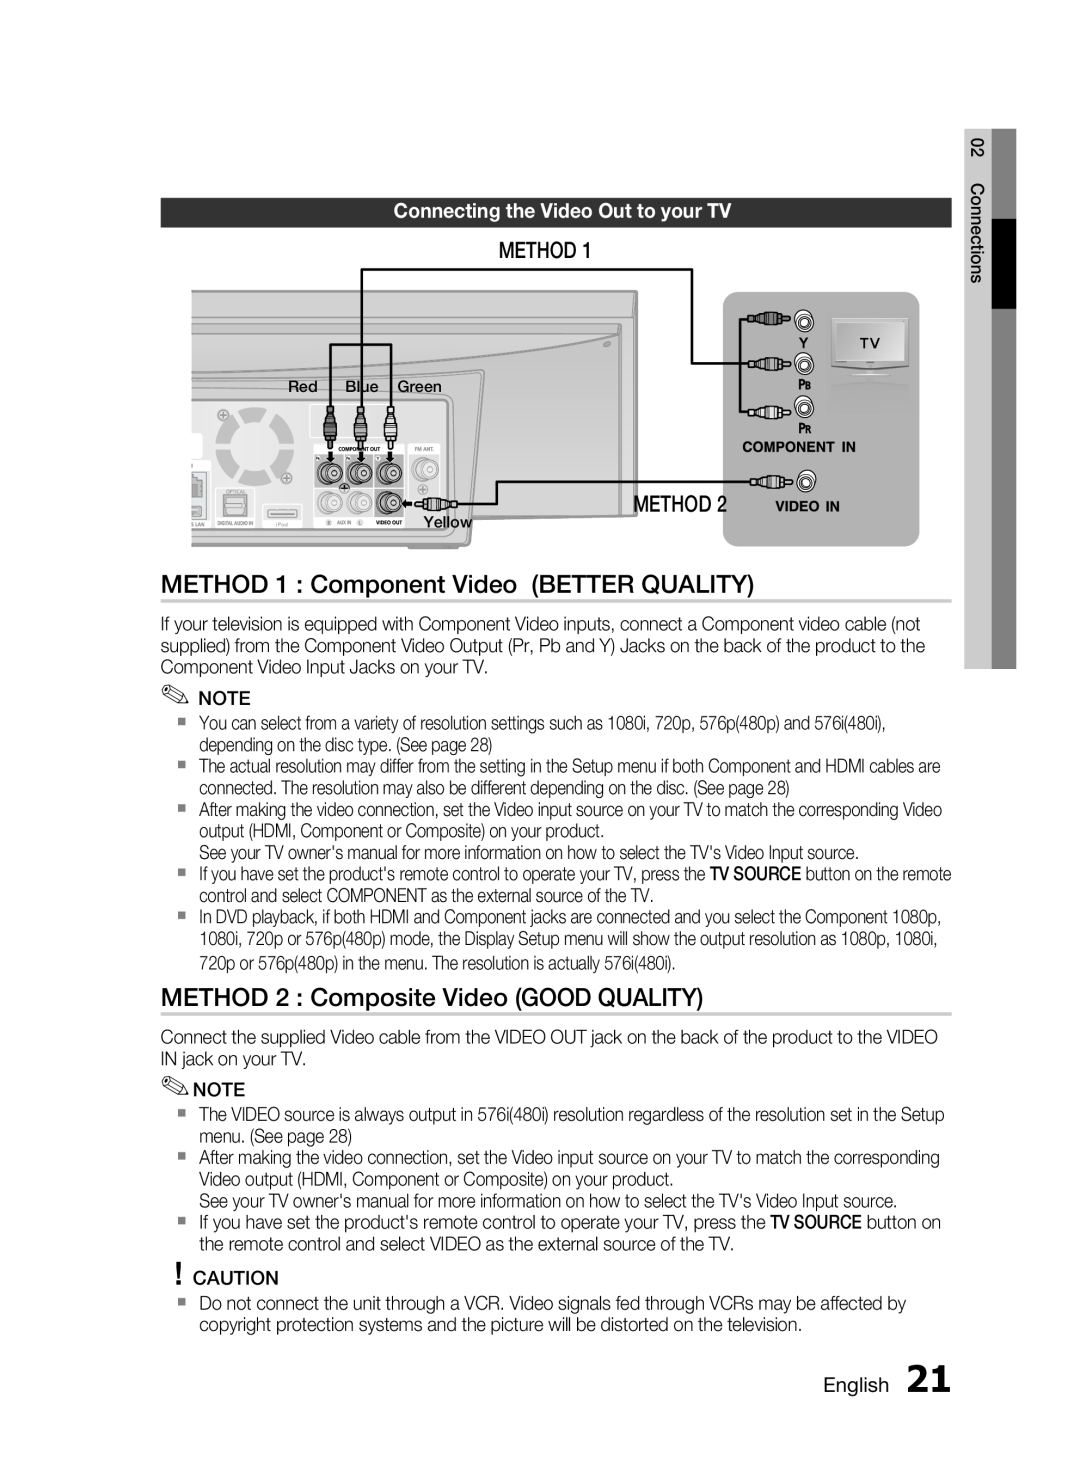 Samsung HT-C7300/EDC manual METHOD 1 Component Video BETTER QUALITY, METHOD 2 Composite Video GOOD QUALITY, Method, English 